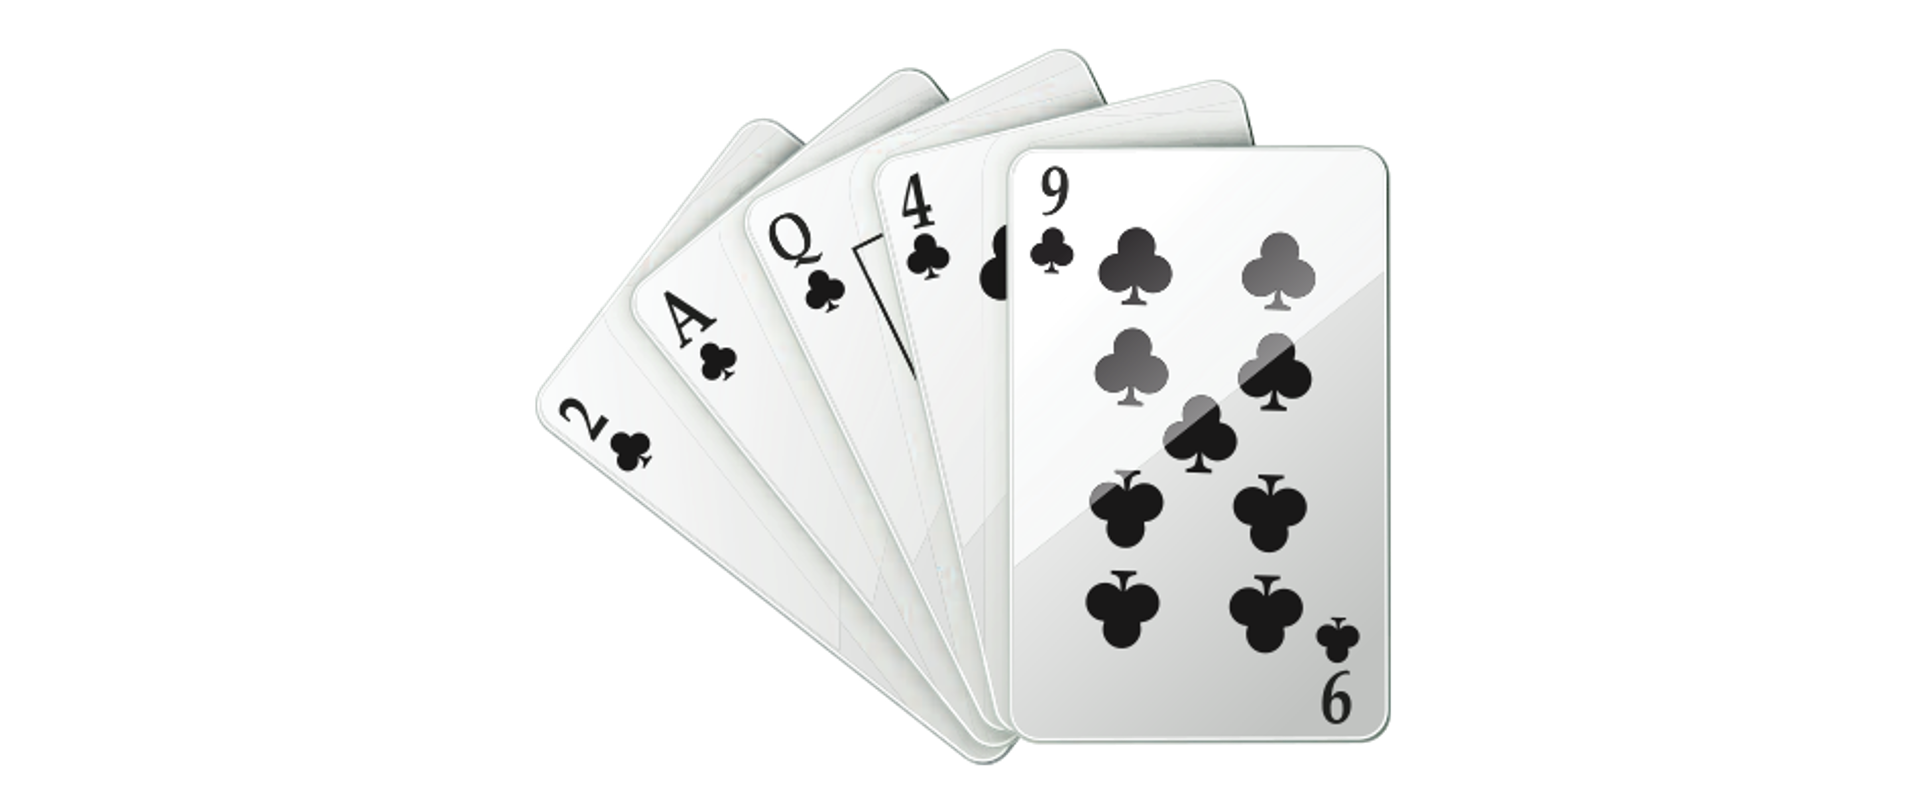 Na obrazku widać 5 kart: 2, A ,Q ,4, 9.